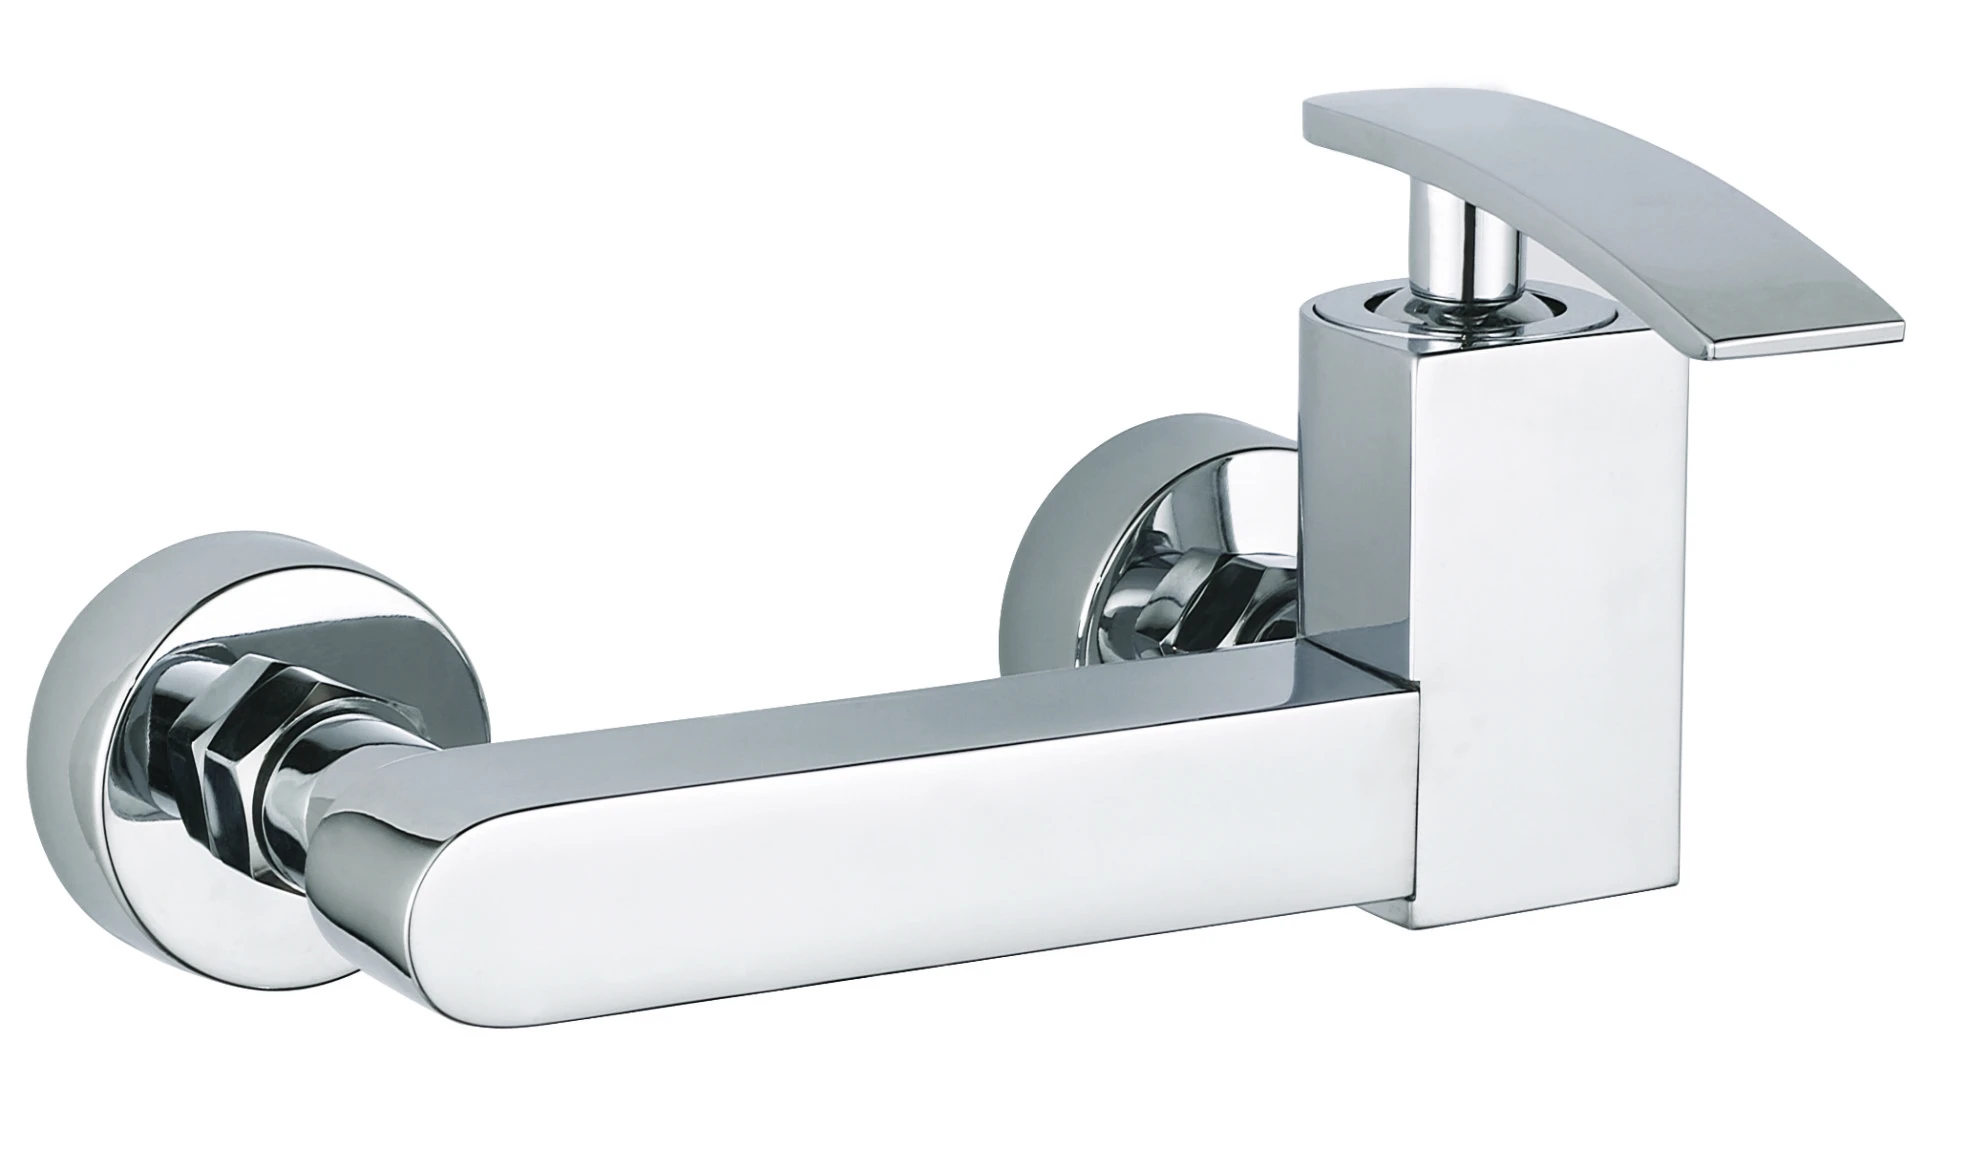 FYES02-3  Moden Design High quality Bath and Shower Mixer Faucet,Brass Bath Shower bathtub Faucet